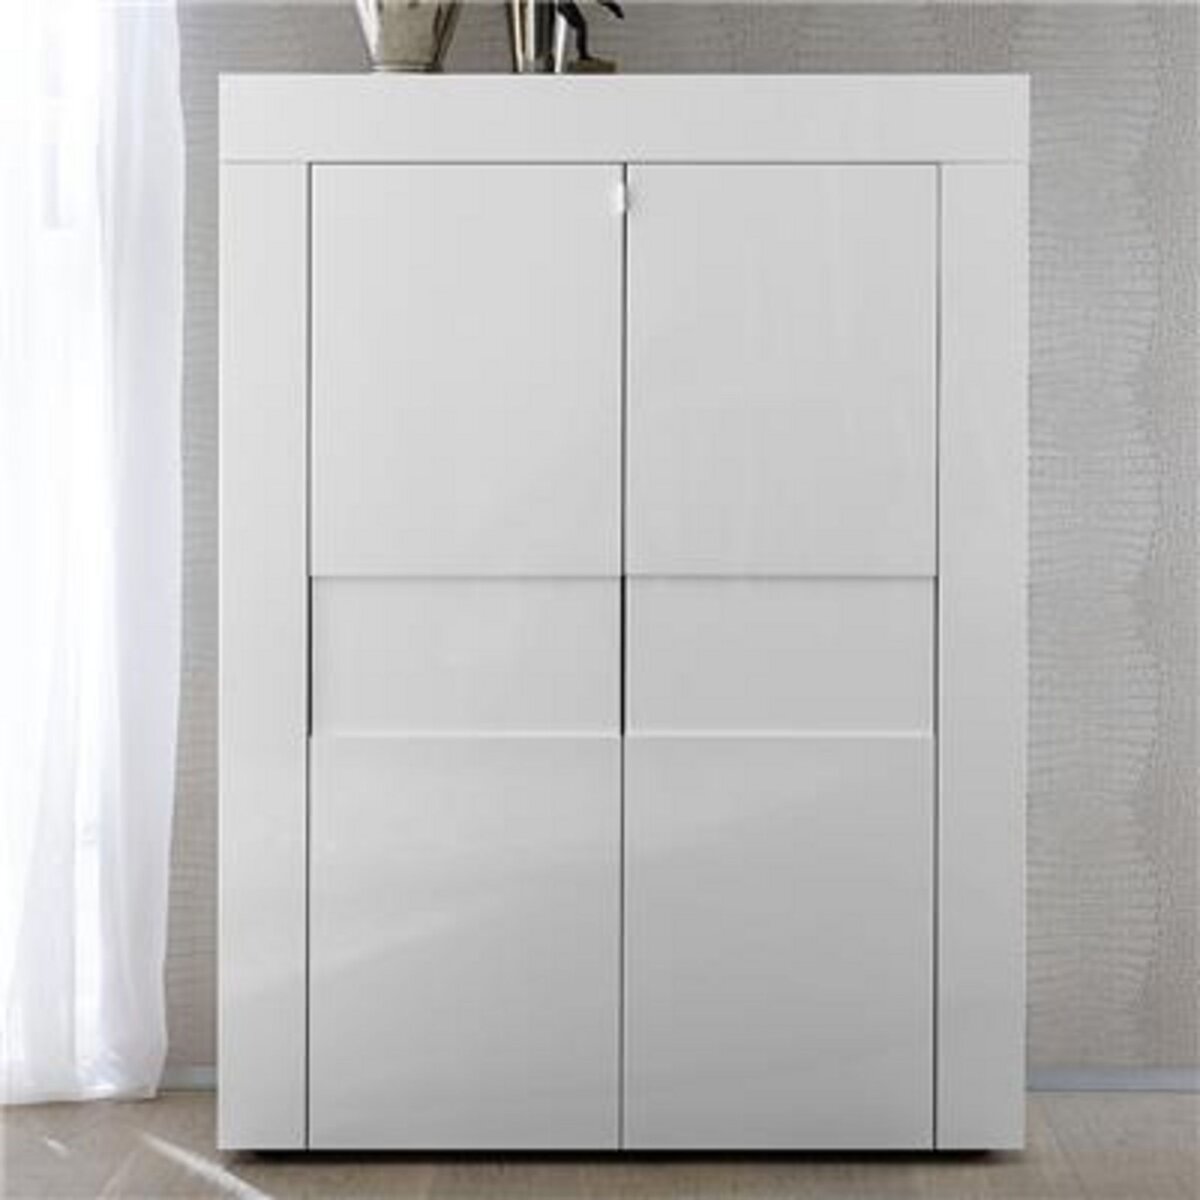 KASALINEA Buffet haut blanc laqué brillant design NEWLAND-L 92 x P 42 x H 125 cm- Blanc